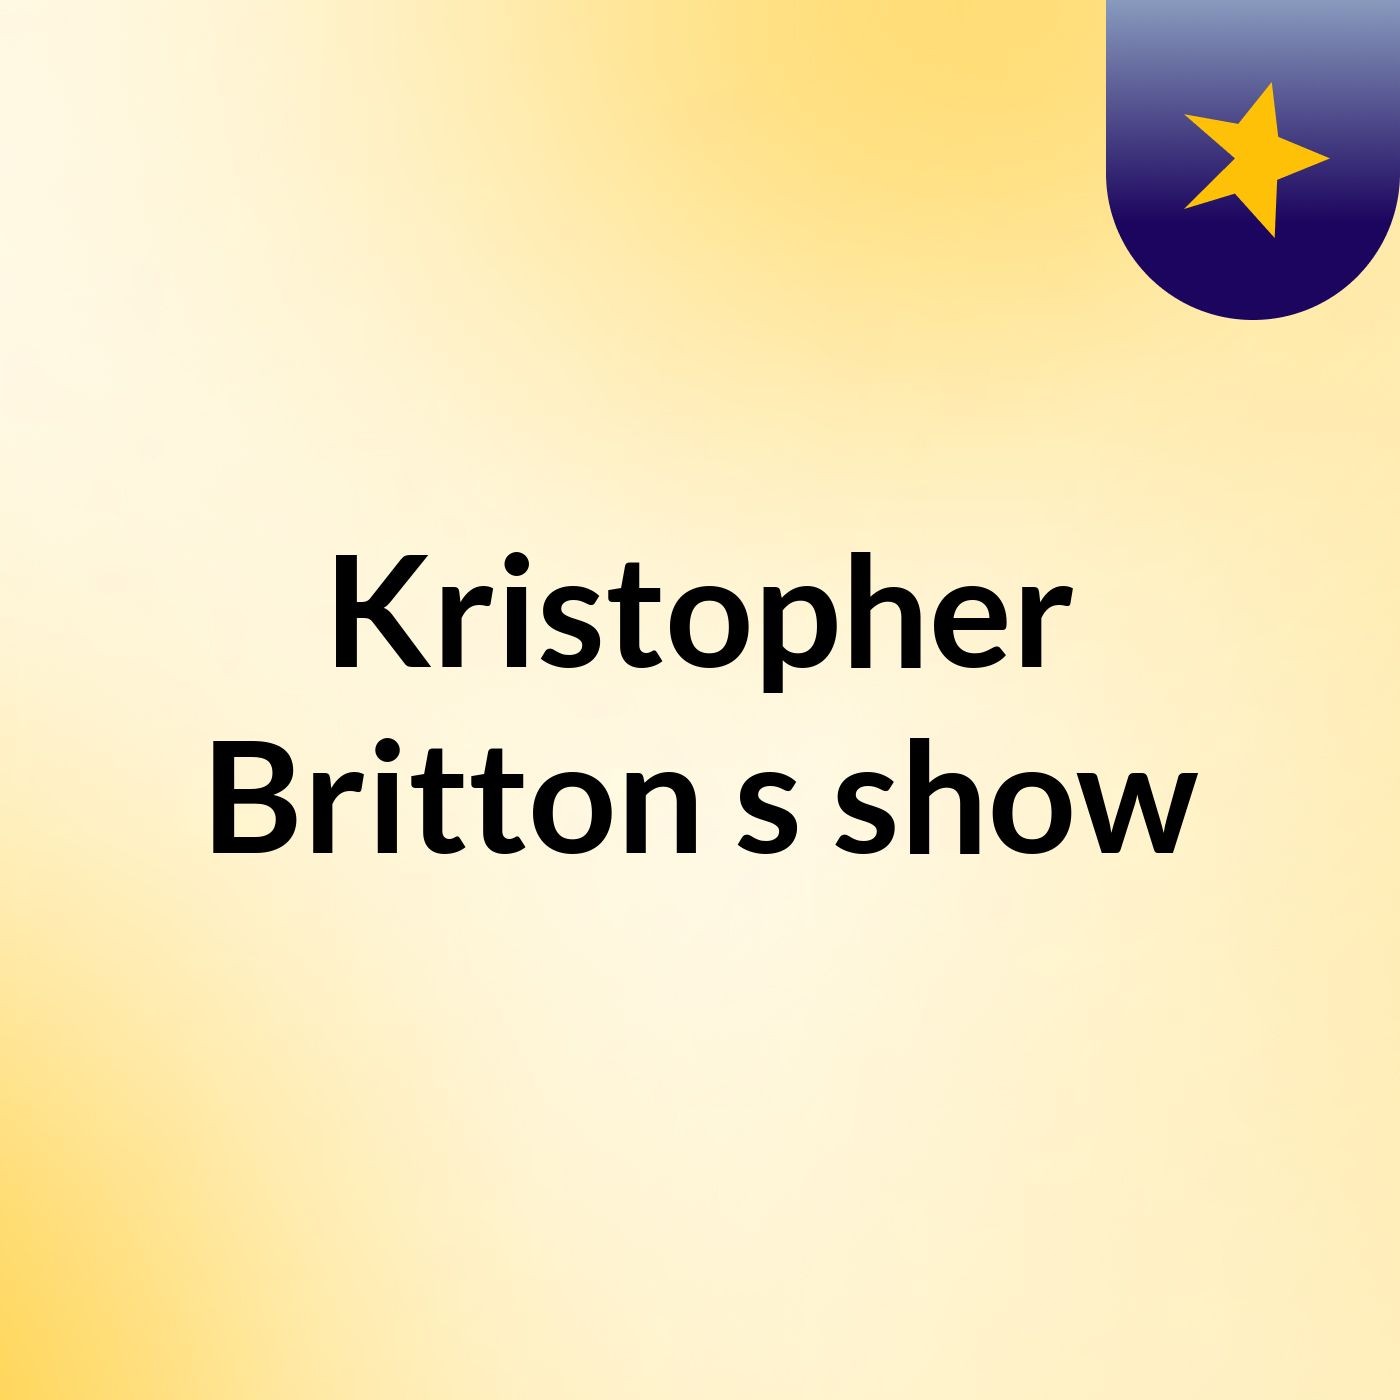 Kristopher Britton's show